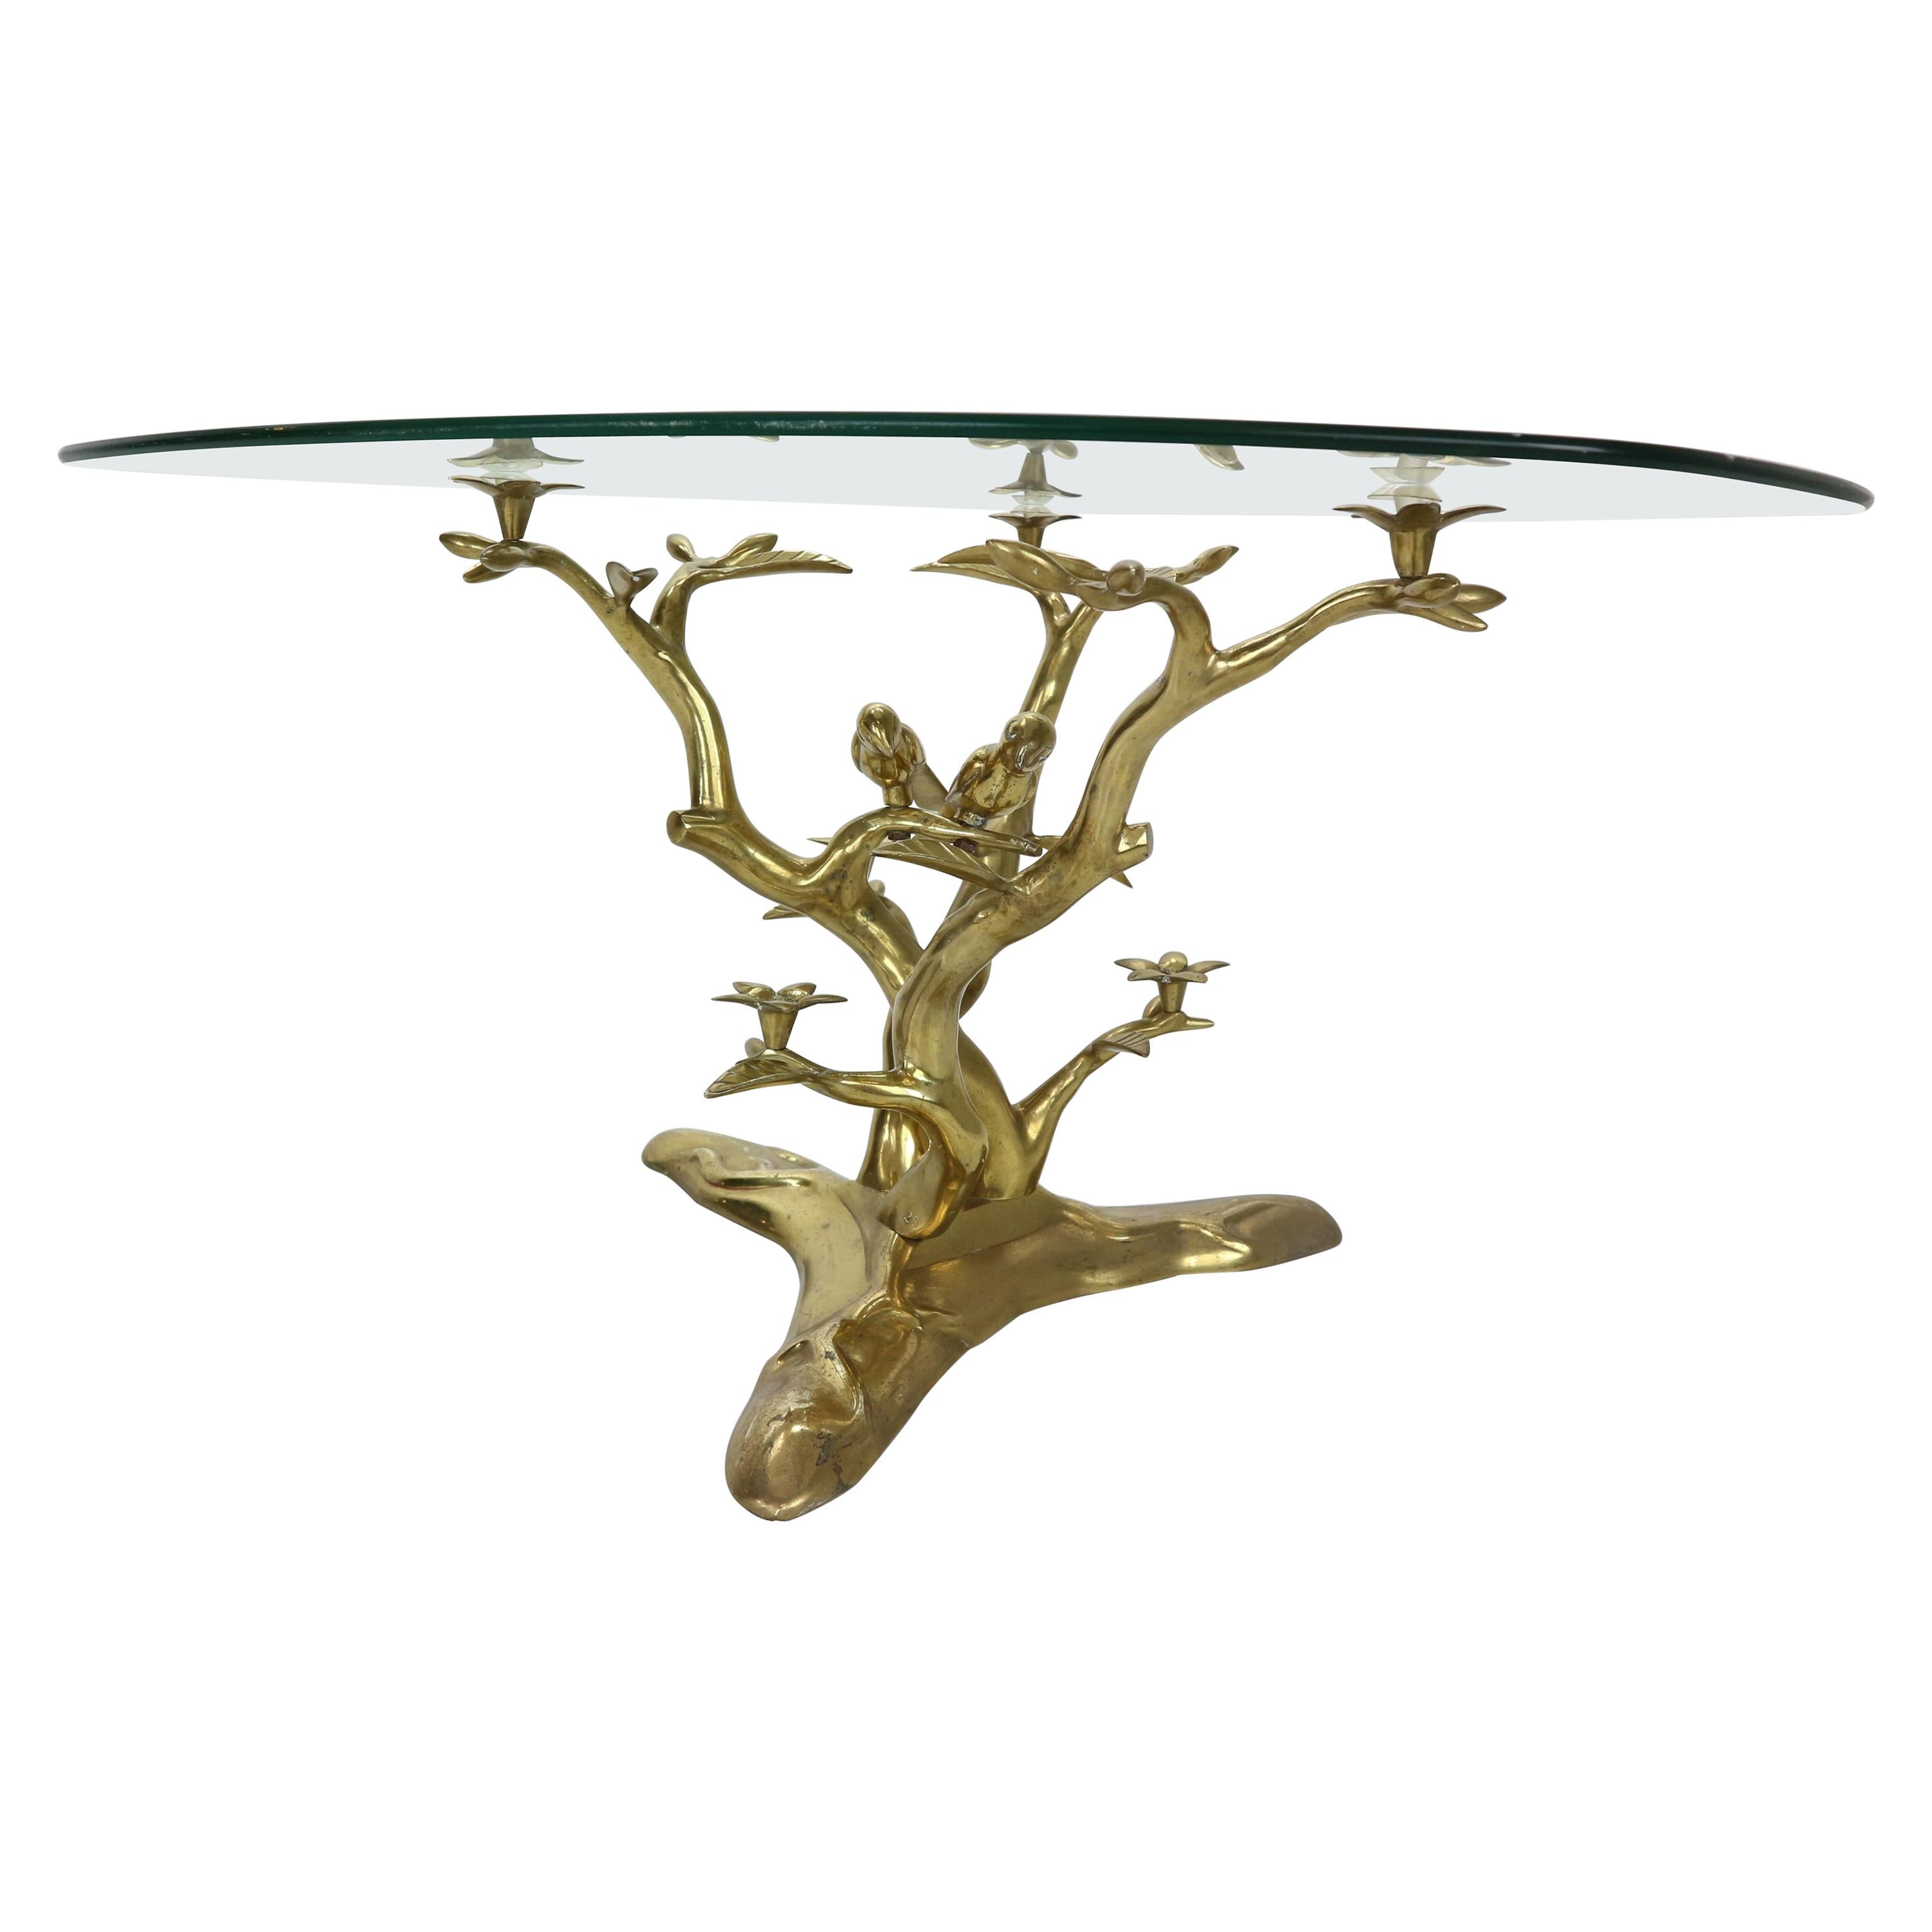 Willy Daro Brass & Glass Tree & Birds Sculpture Coffee Table, 1970s, Belgium